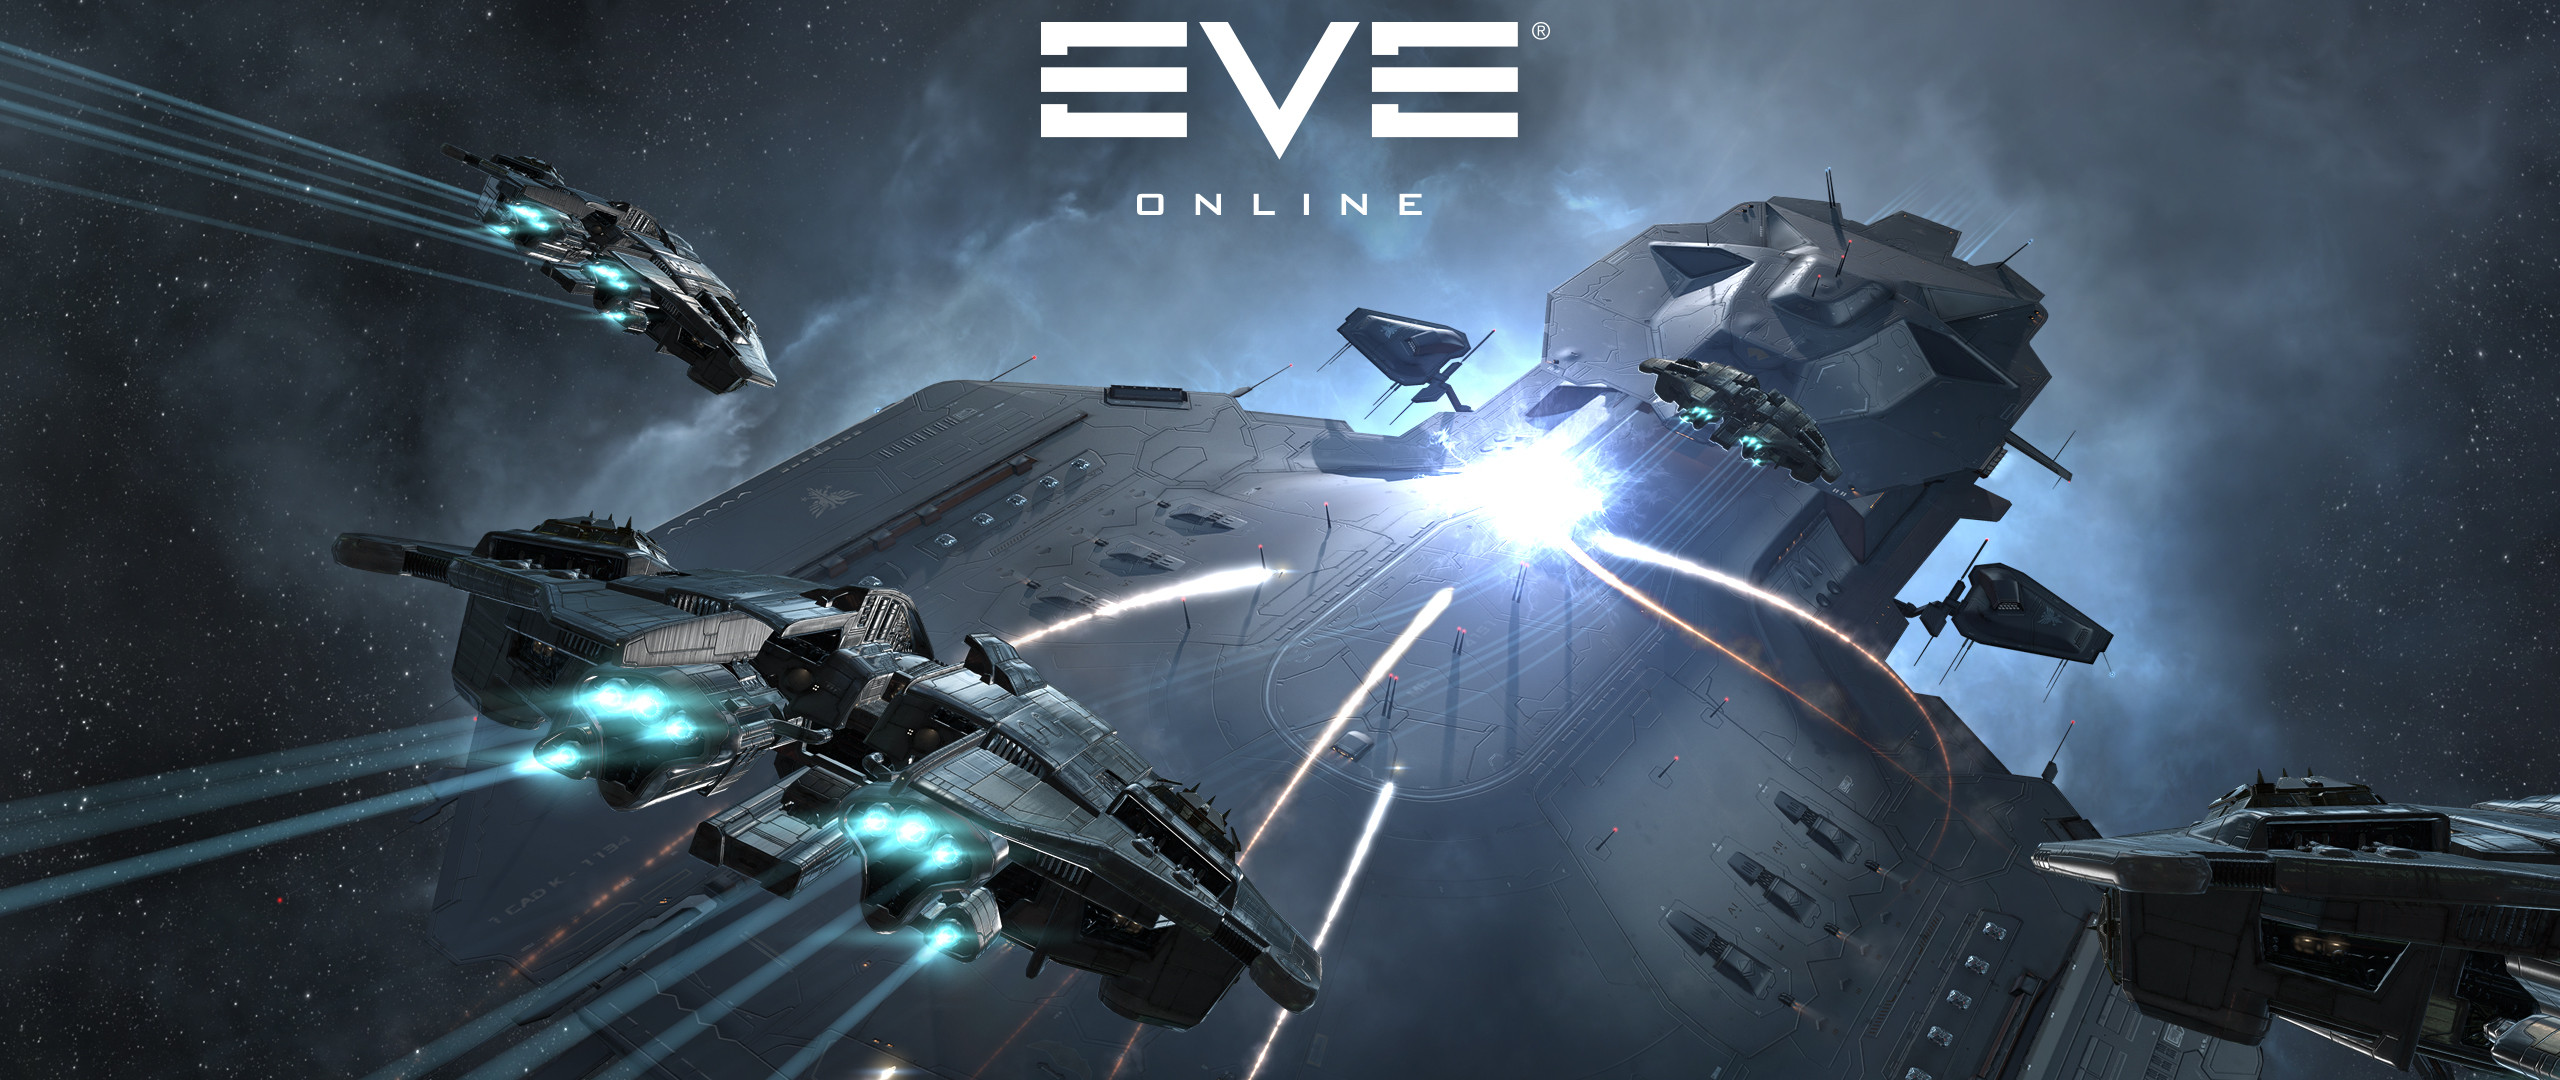 EVE Online Wallpapers